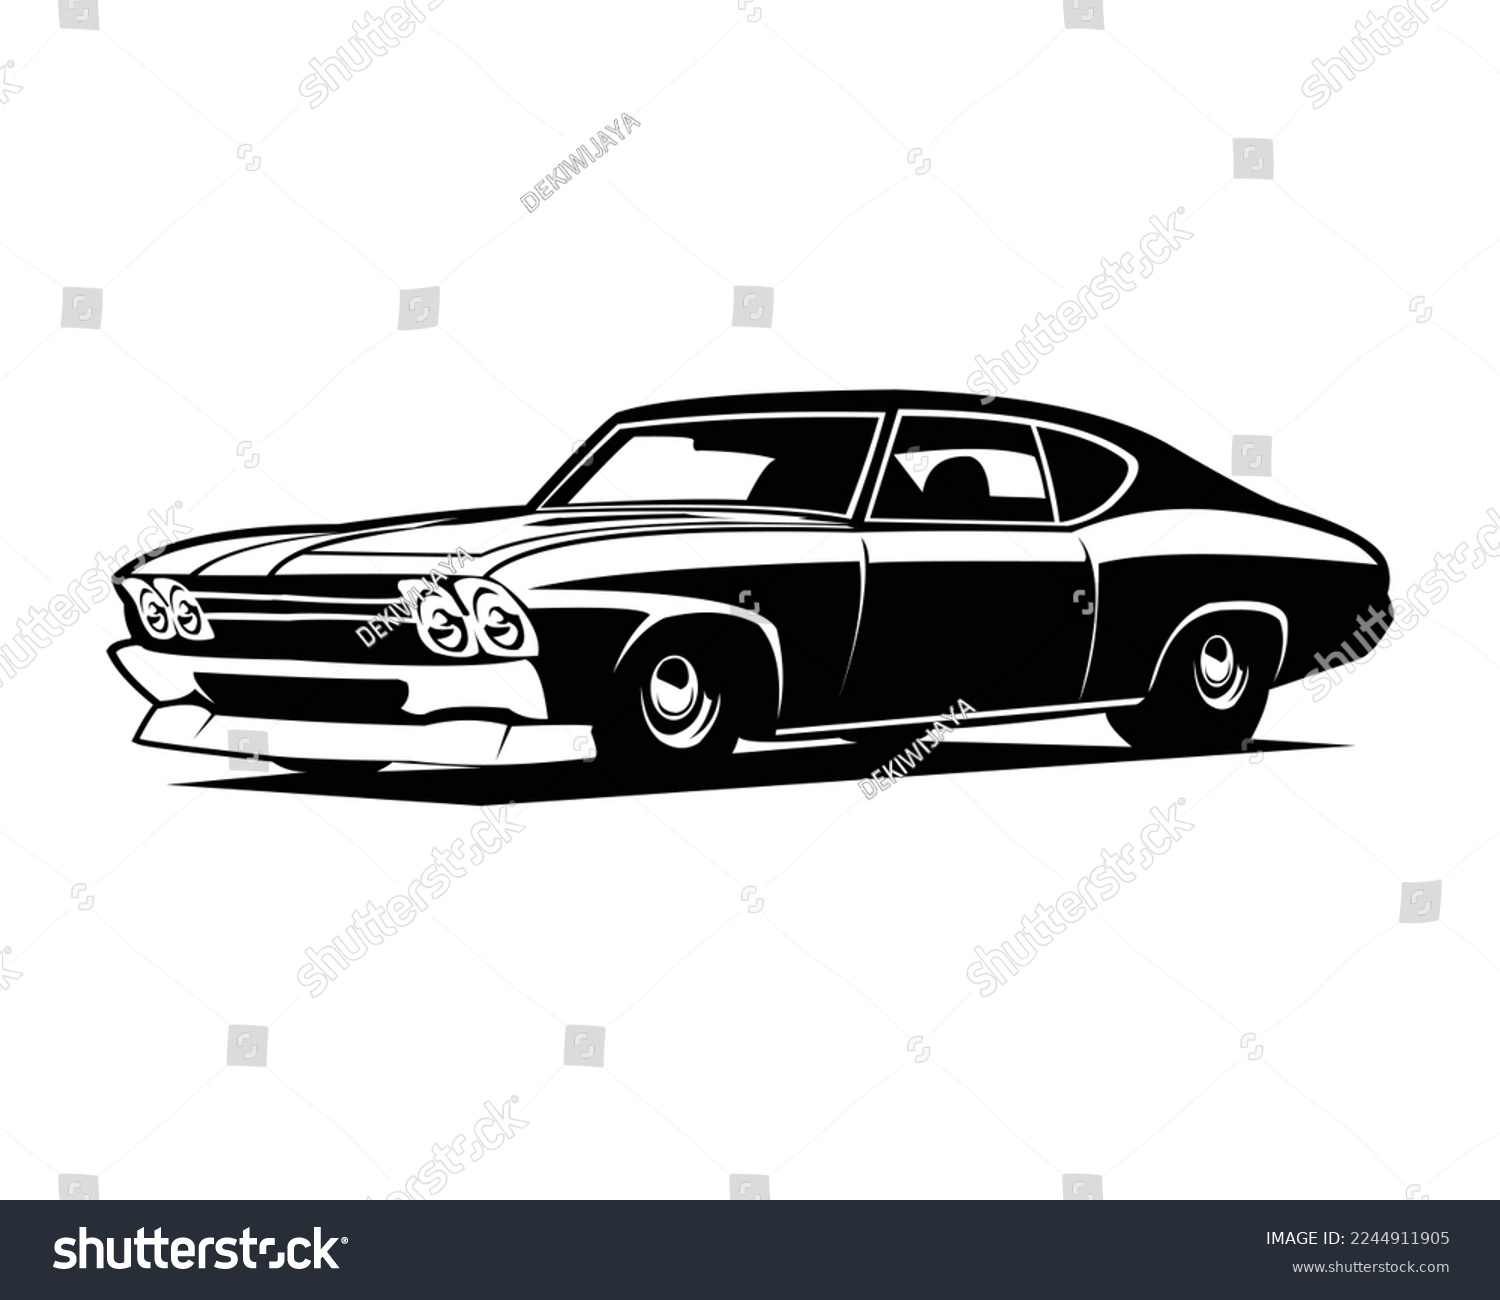 SVG of classic chevy camaro car logo silhouette. best side view for badge, emblem, concept, sticker design. svg